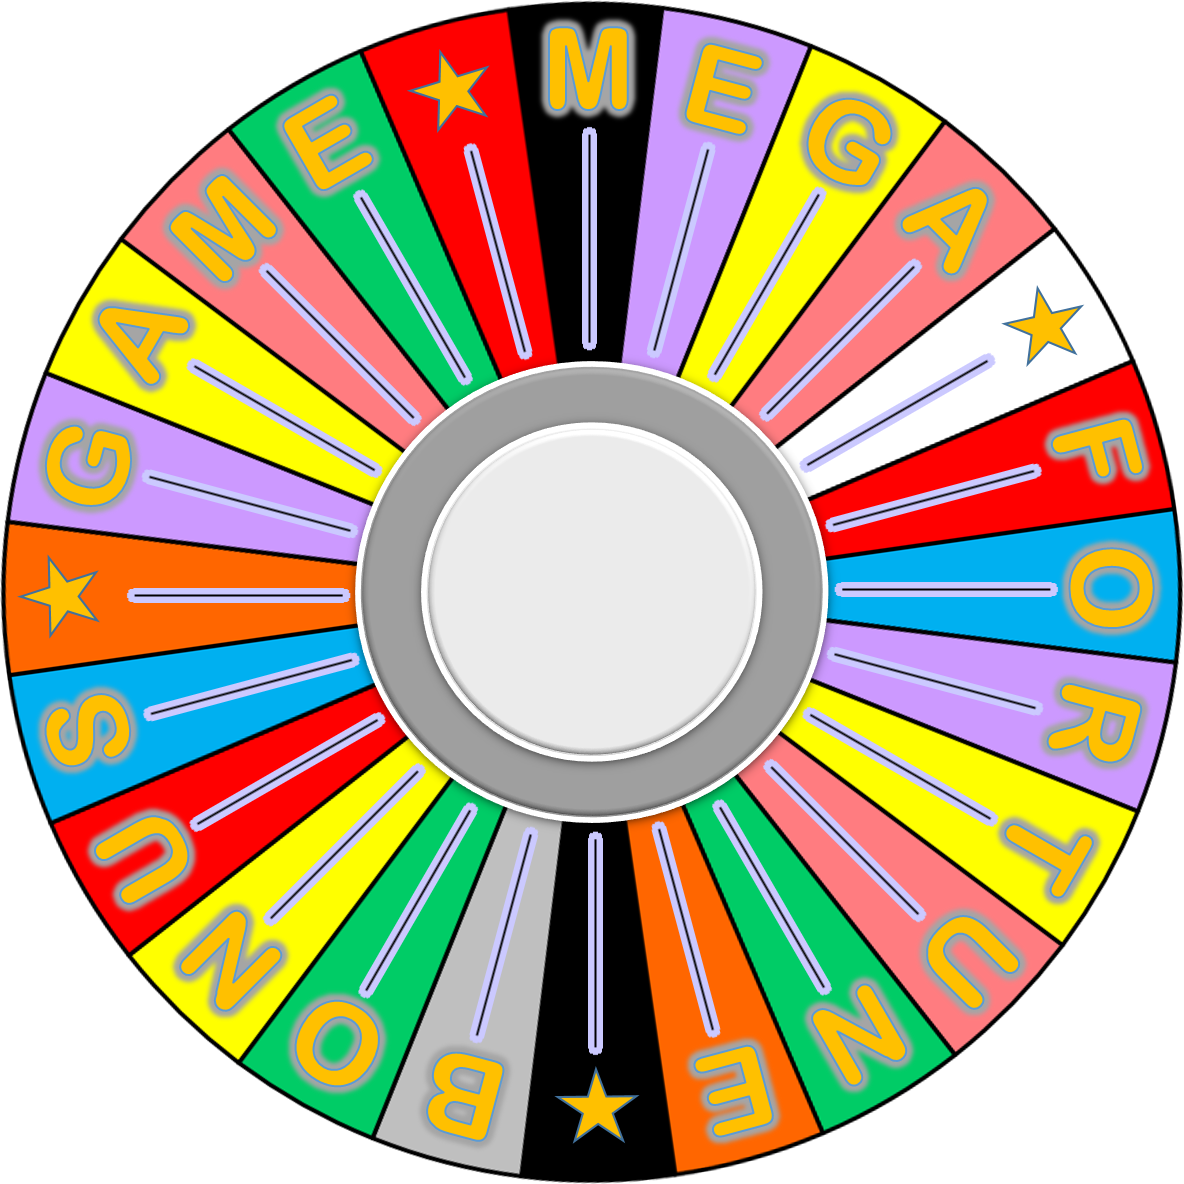 Mega Fortune Bonus Wheel by LeafMan813 on DeviantArt